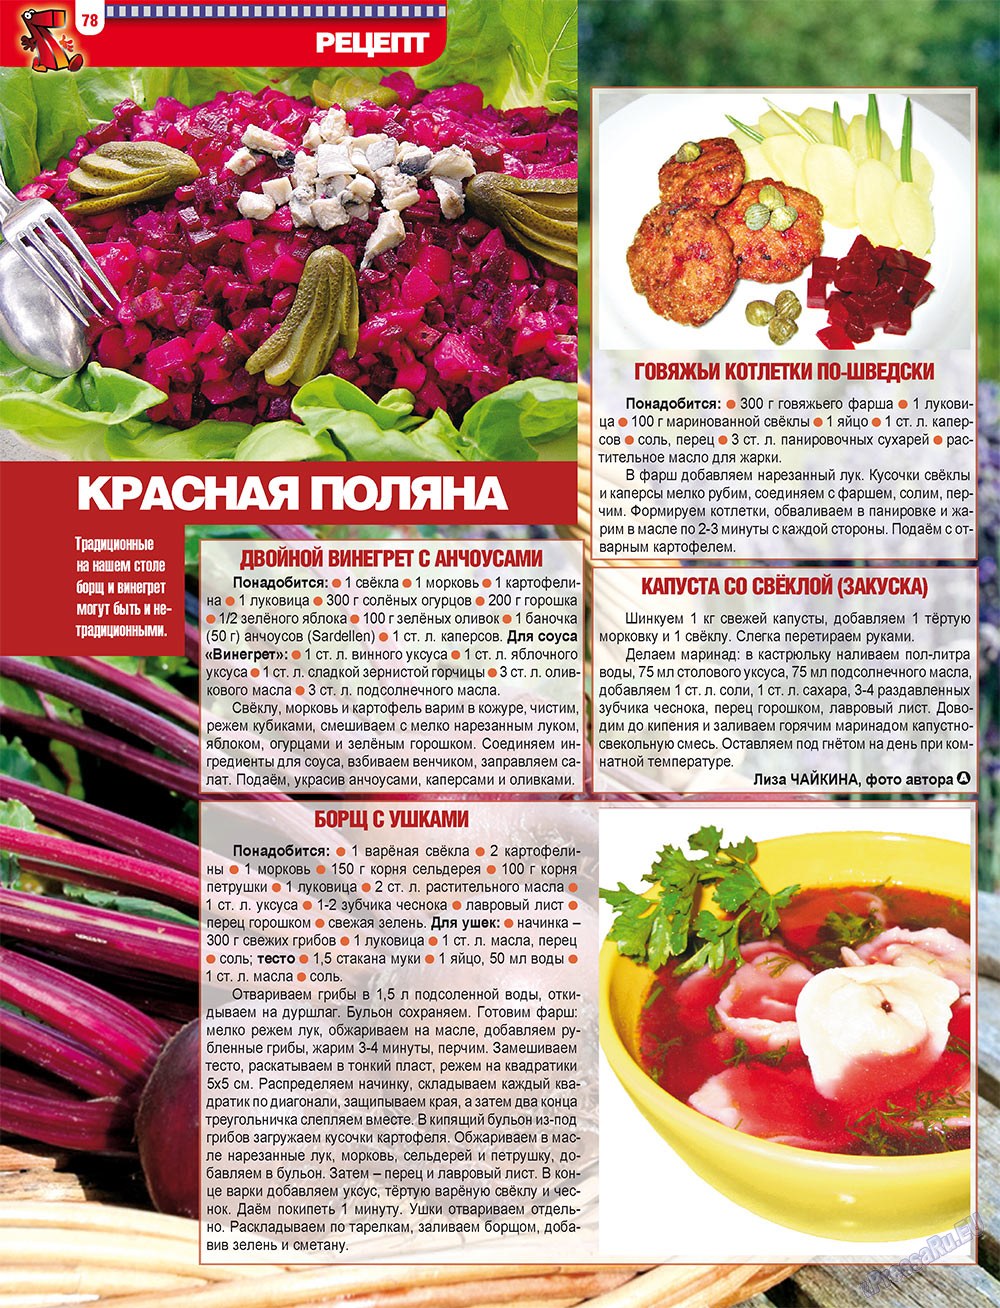 7плюс7я (журнал). 2010 год, номер 47, стр. 78